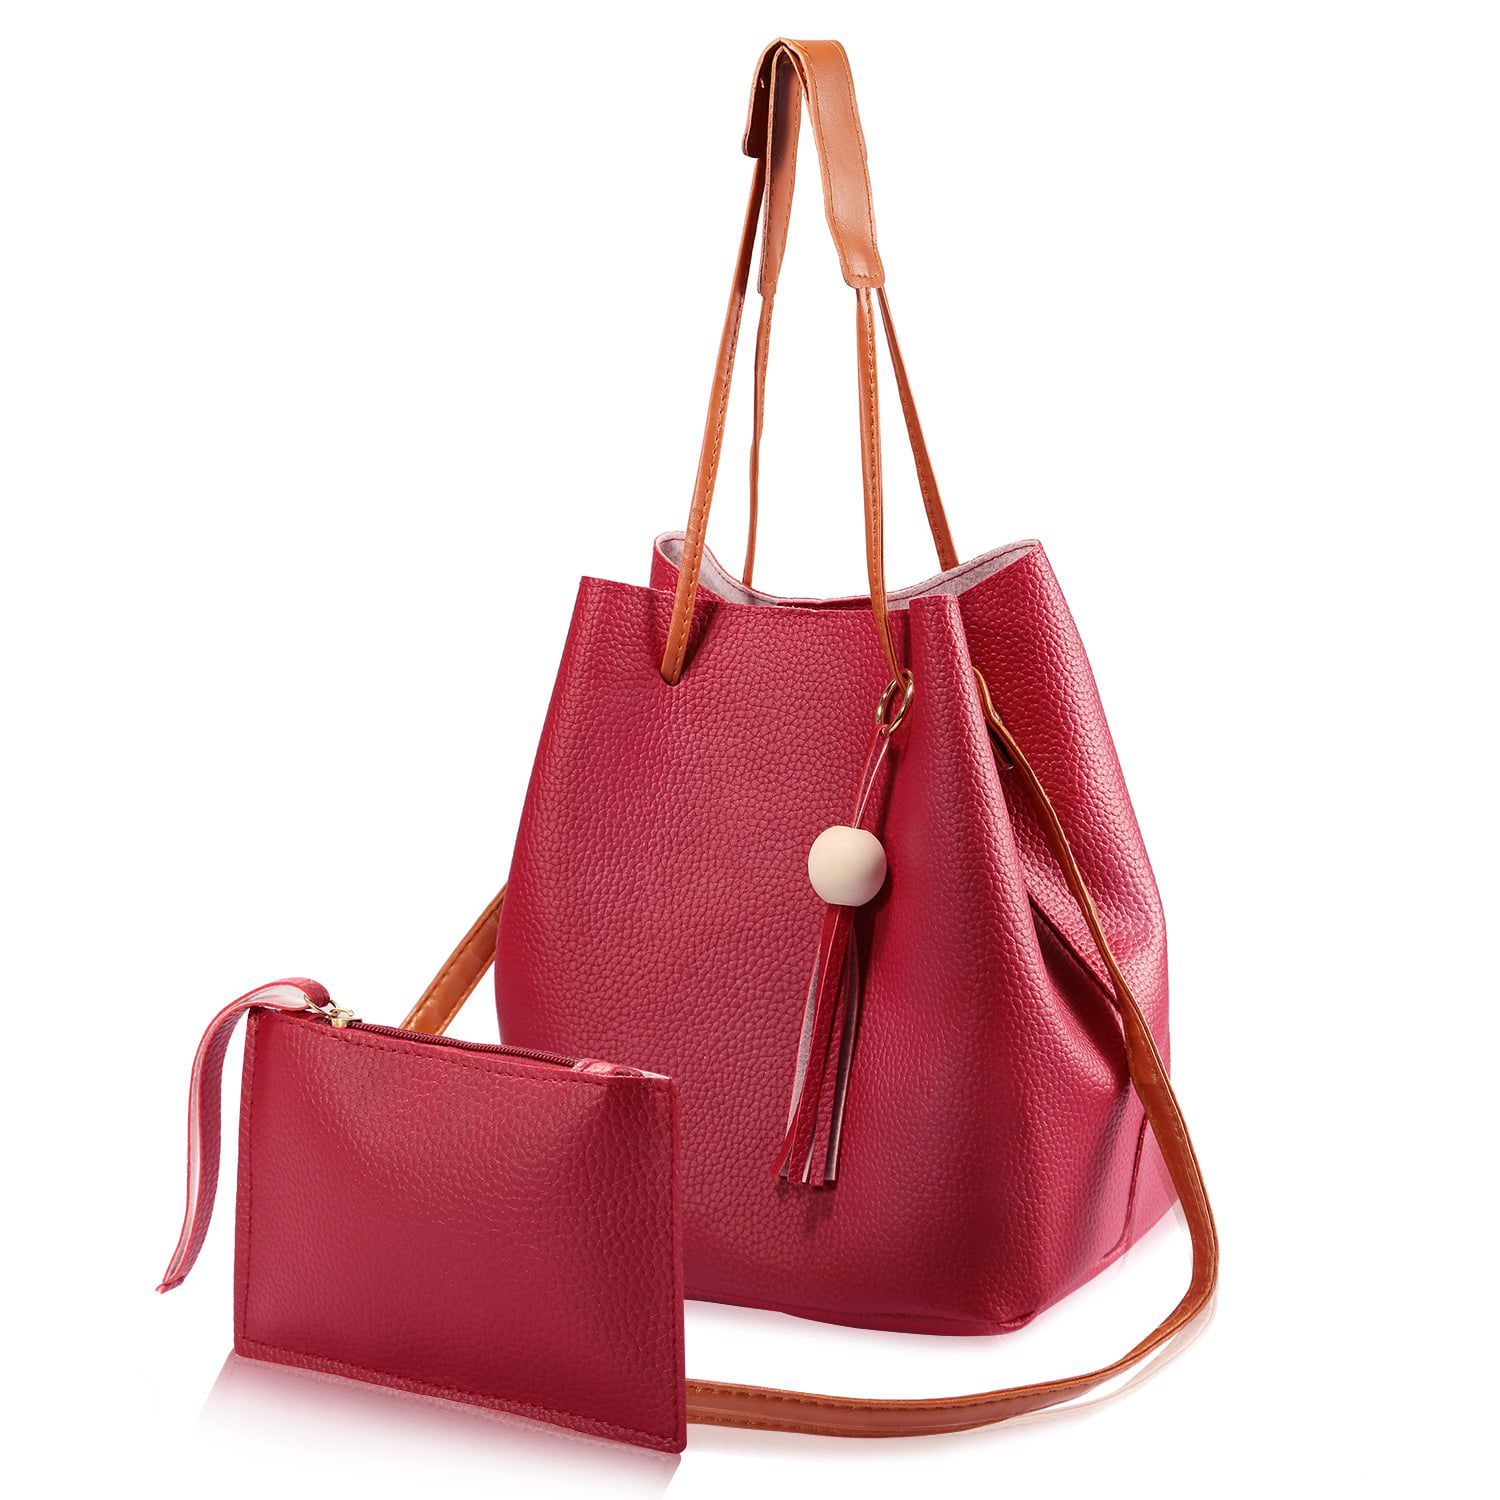 1Set/2Pcs Women Leather Handbags Shoulder Bags Lady Crossbody Bags Clutch Purse - www.speedy25.com